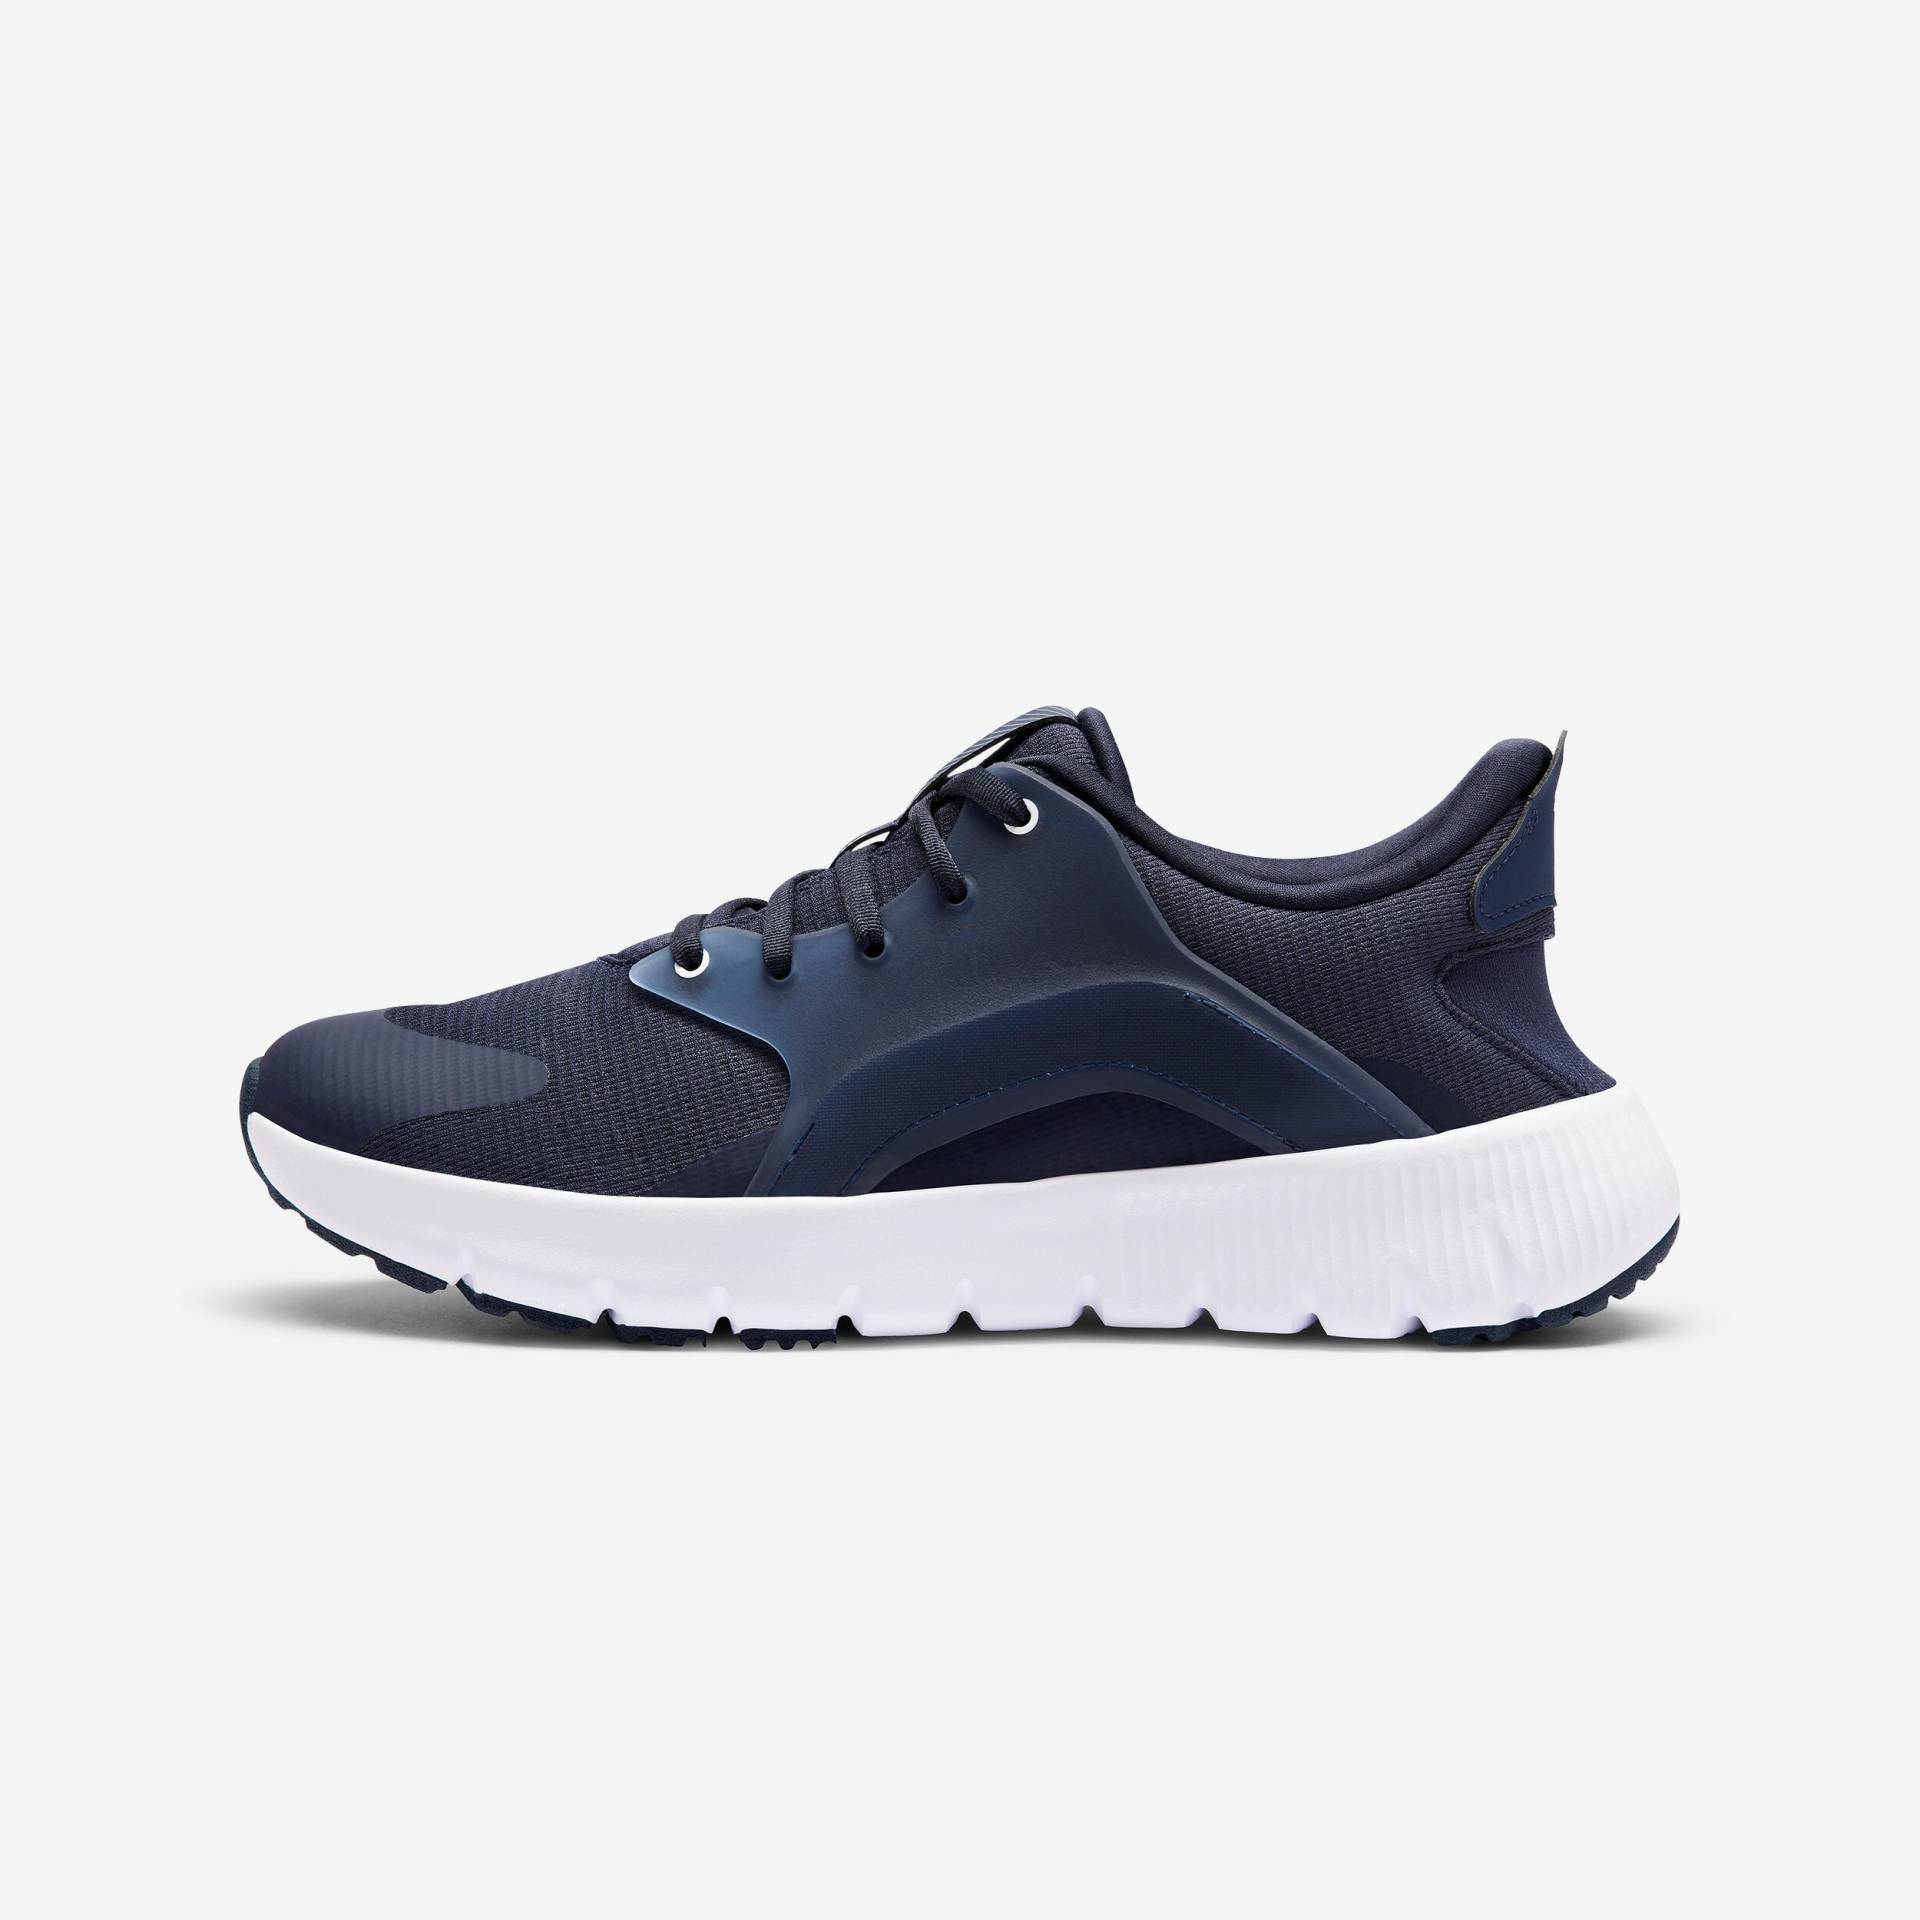 Walking Schuhe Sneaker Herren Standard - SW500.1 blau von Kalenji